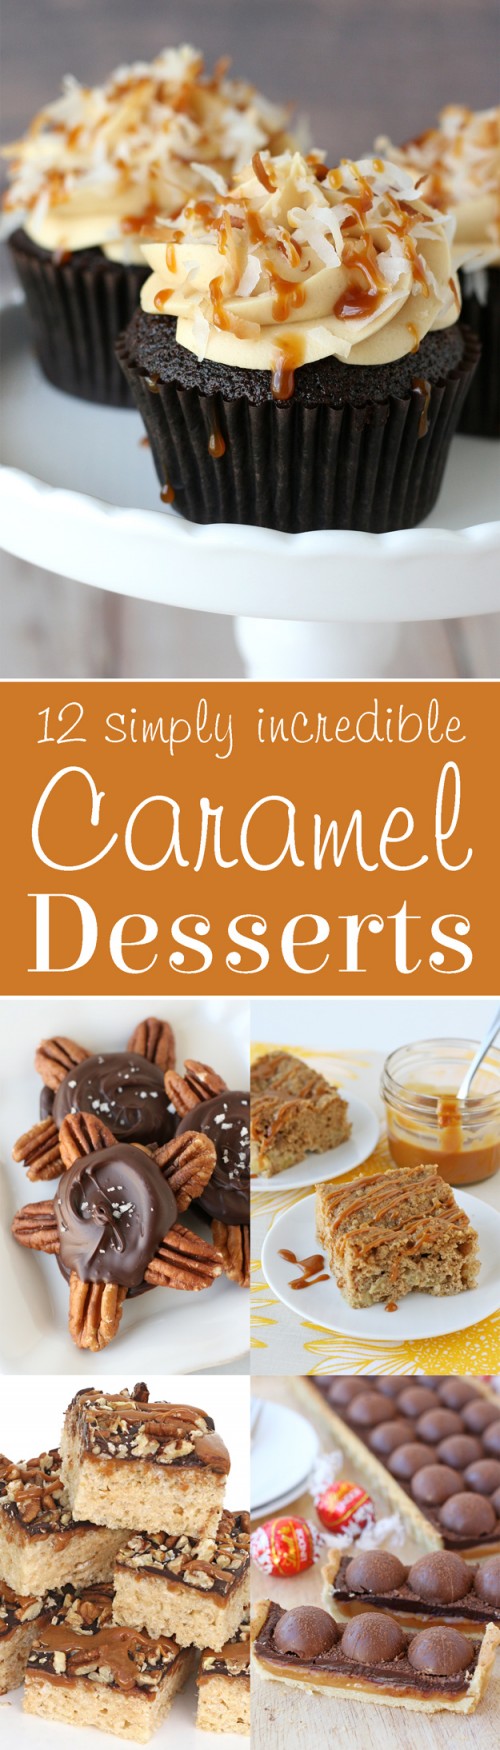 12 Incredible Caramel Dessert Recipes - Glorious Treats